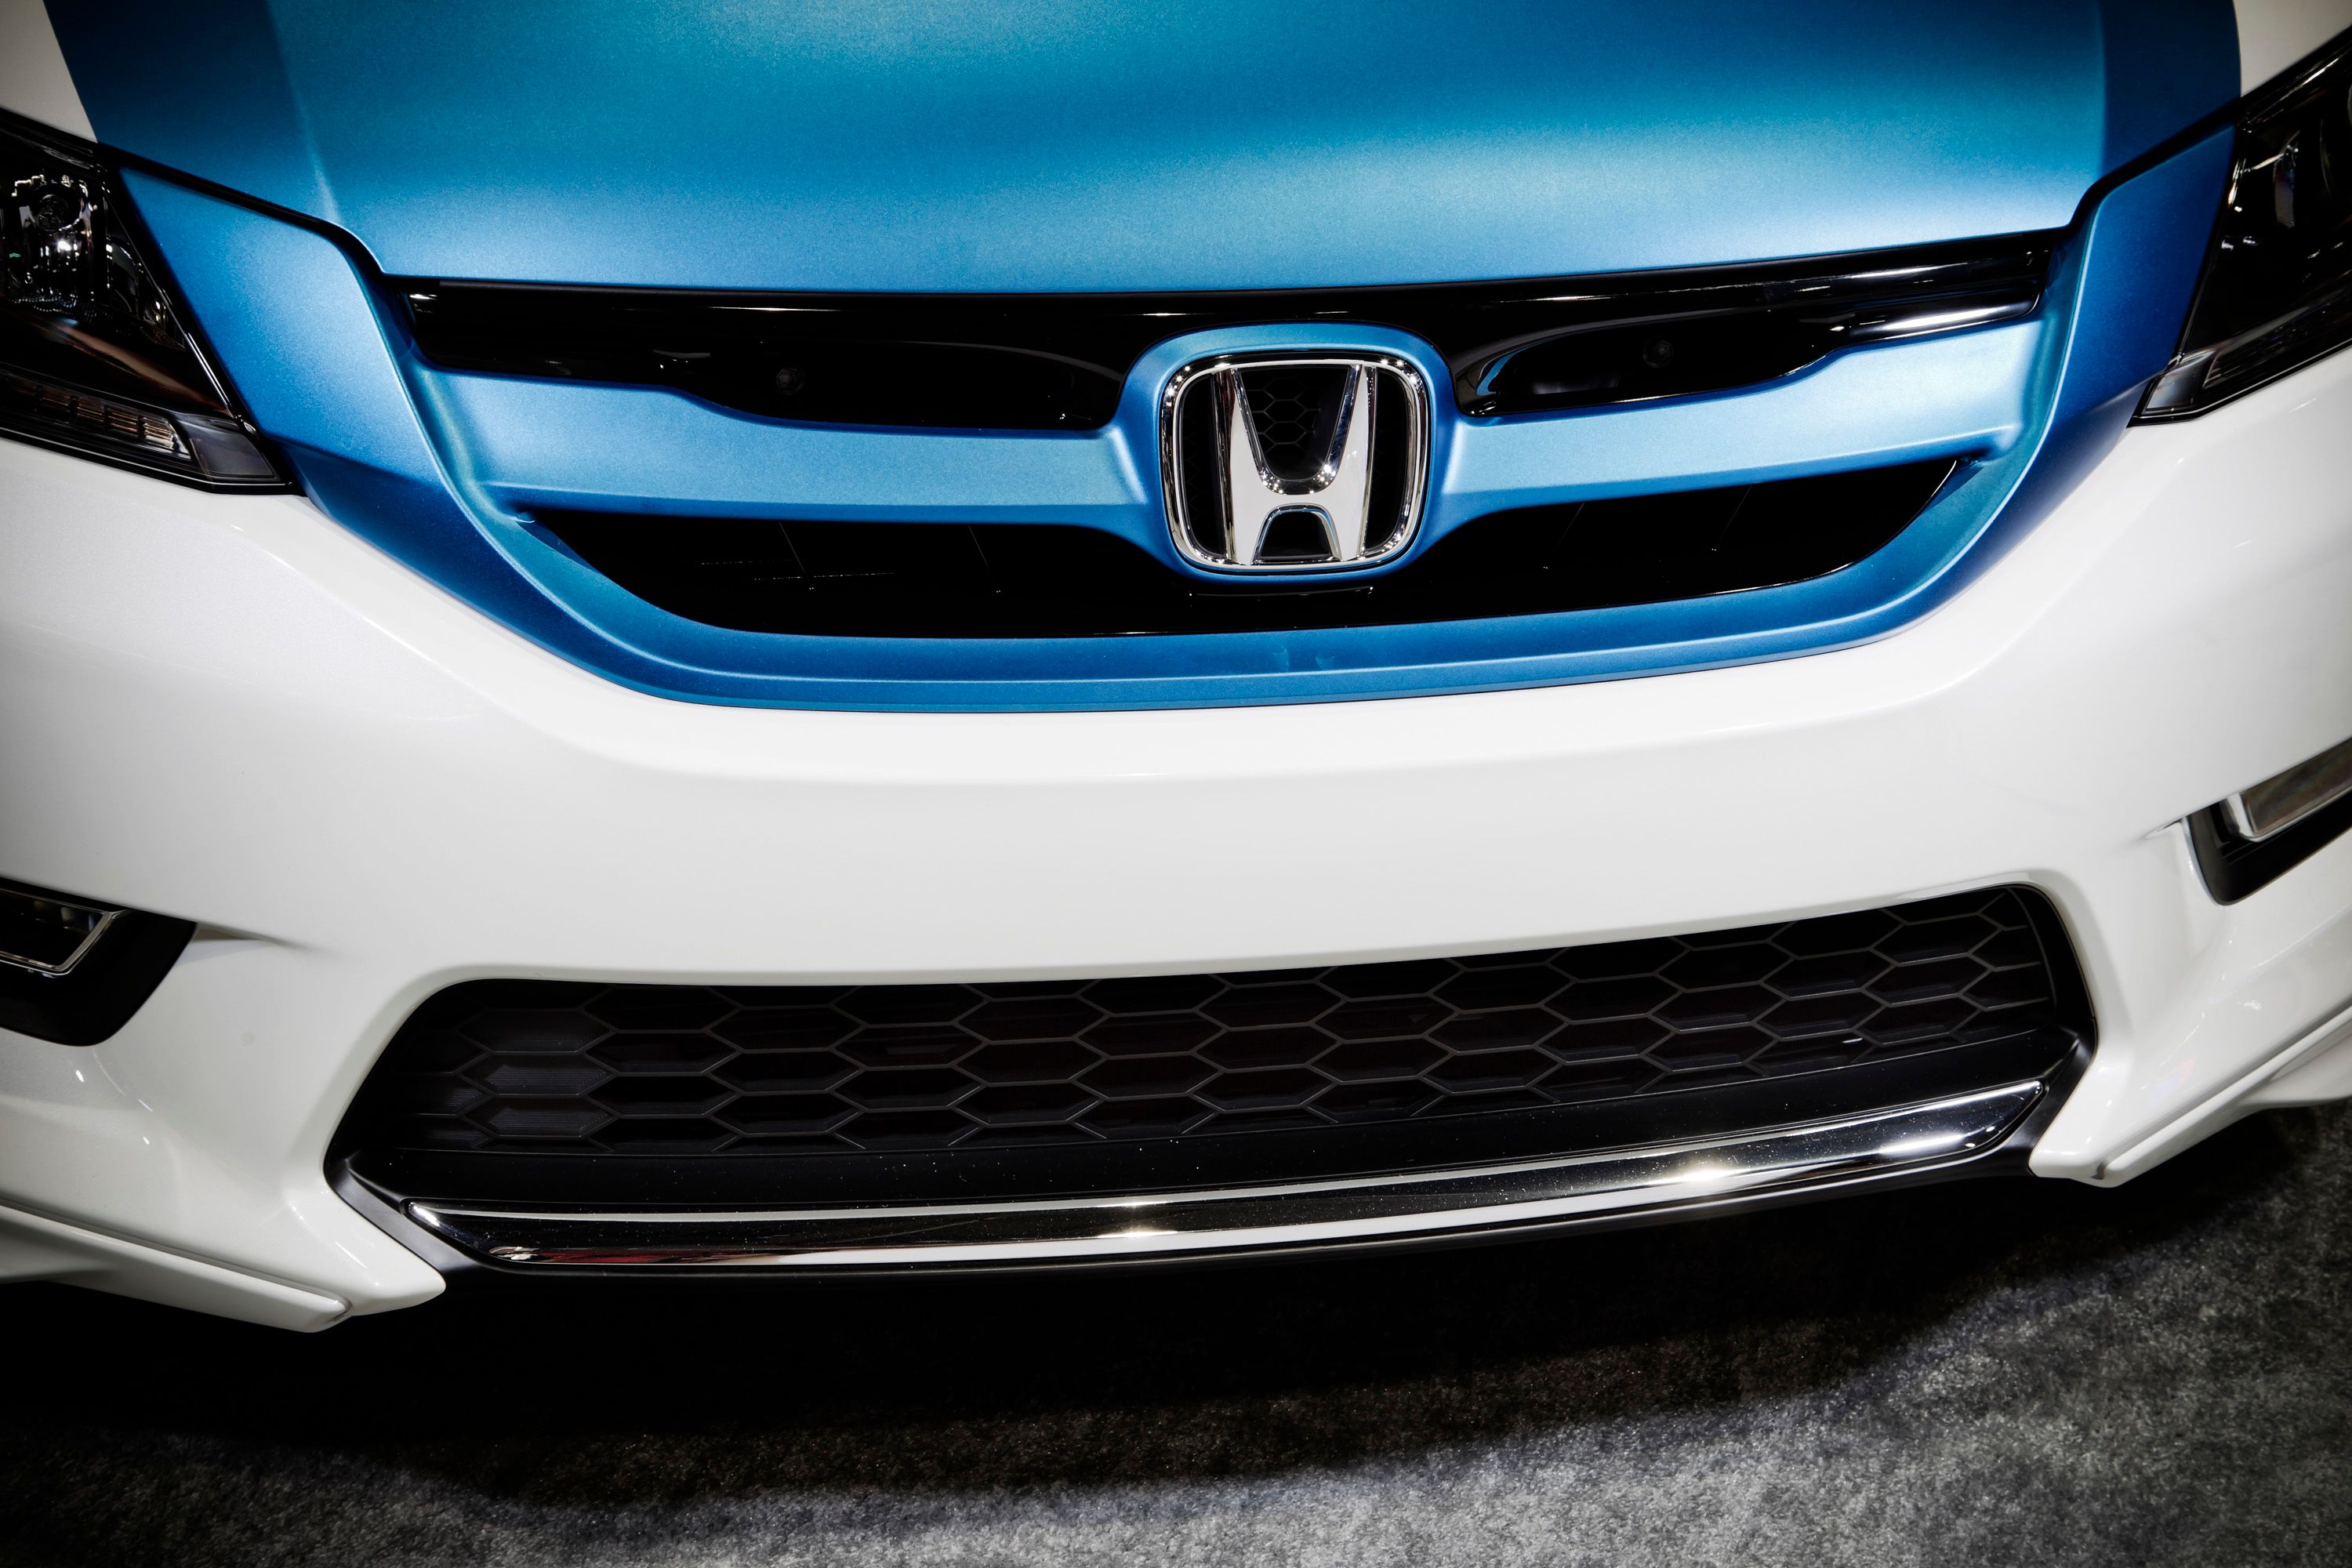 2013 Honda Accord Sedan X-Package